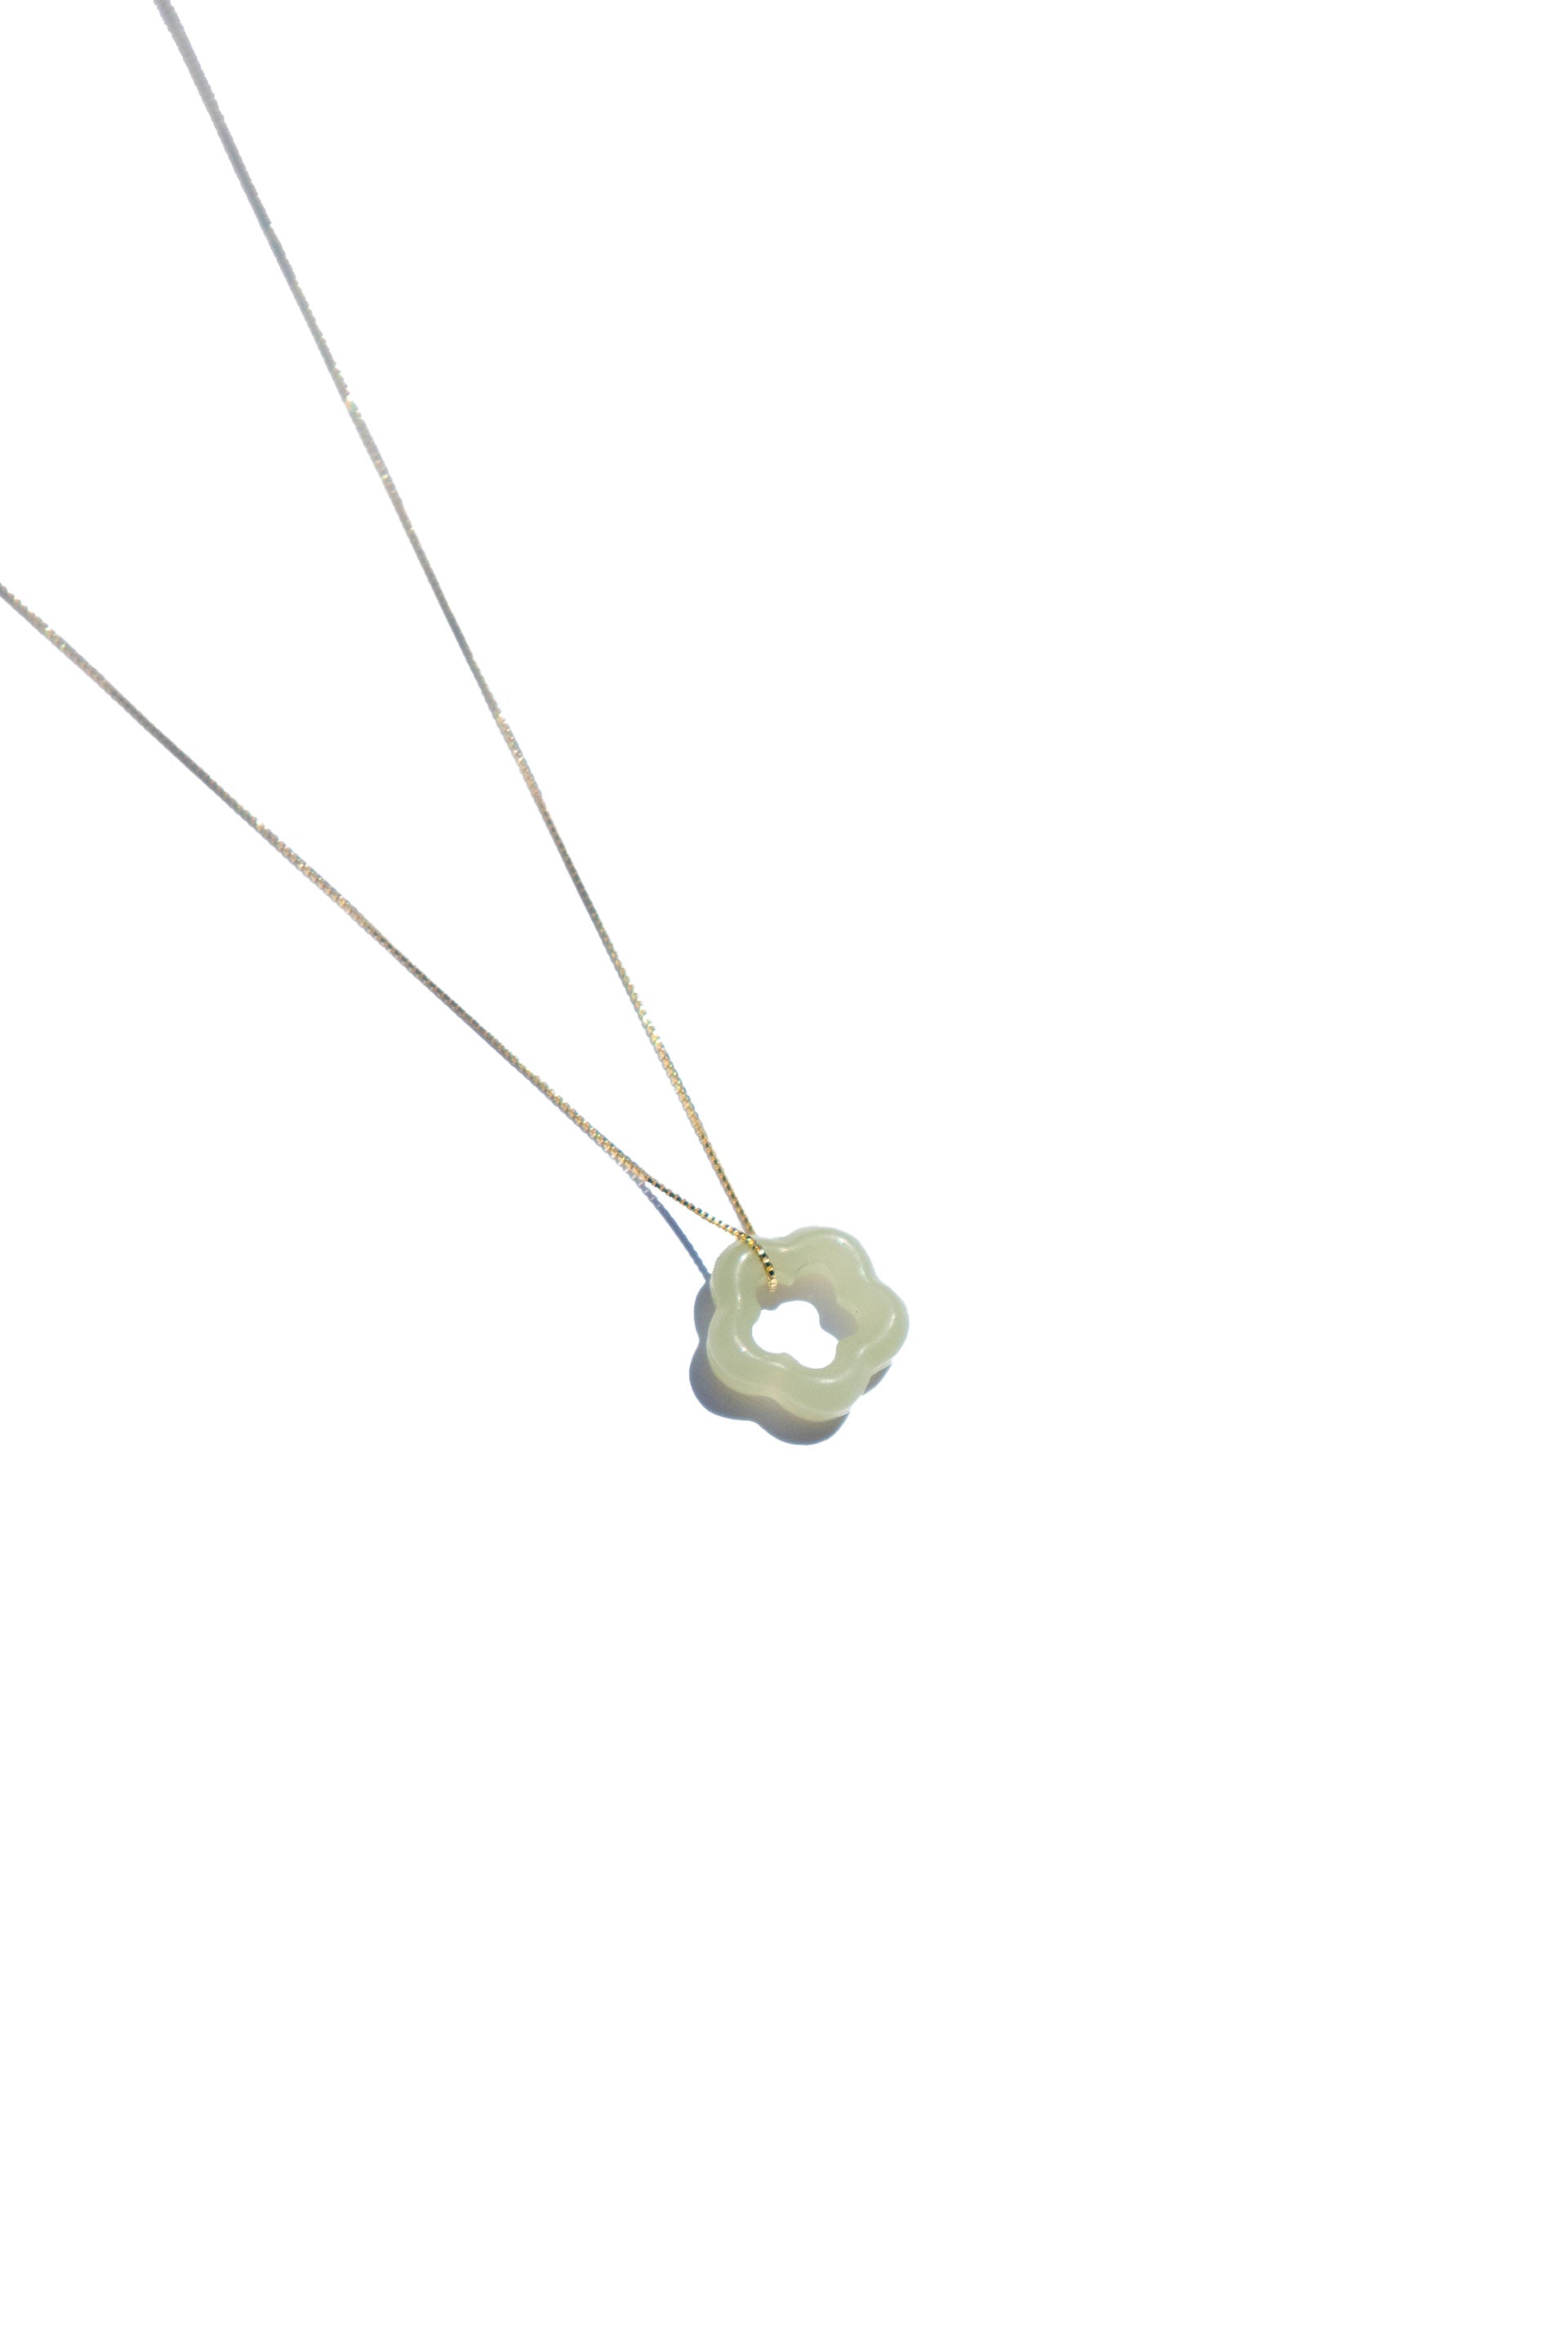 1pc Plum Blossom Shaped Sandy Gold & White Jade Pendant Necklace